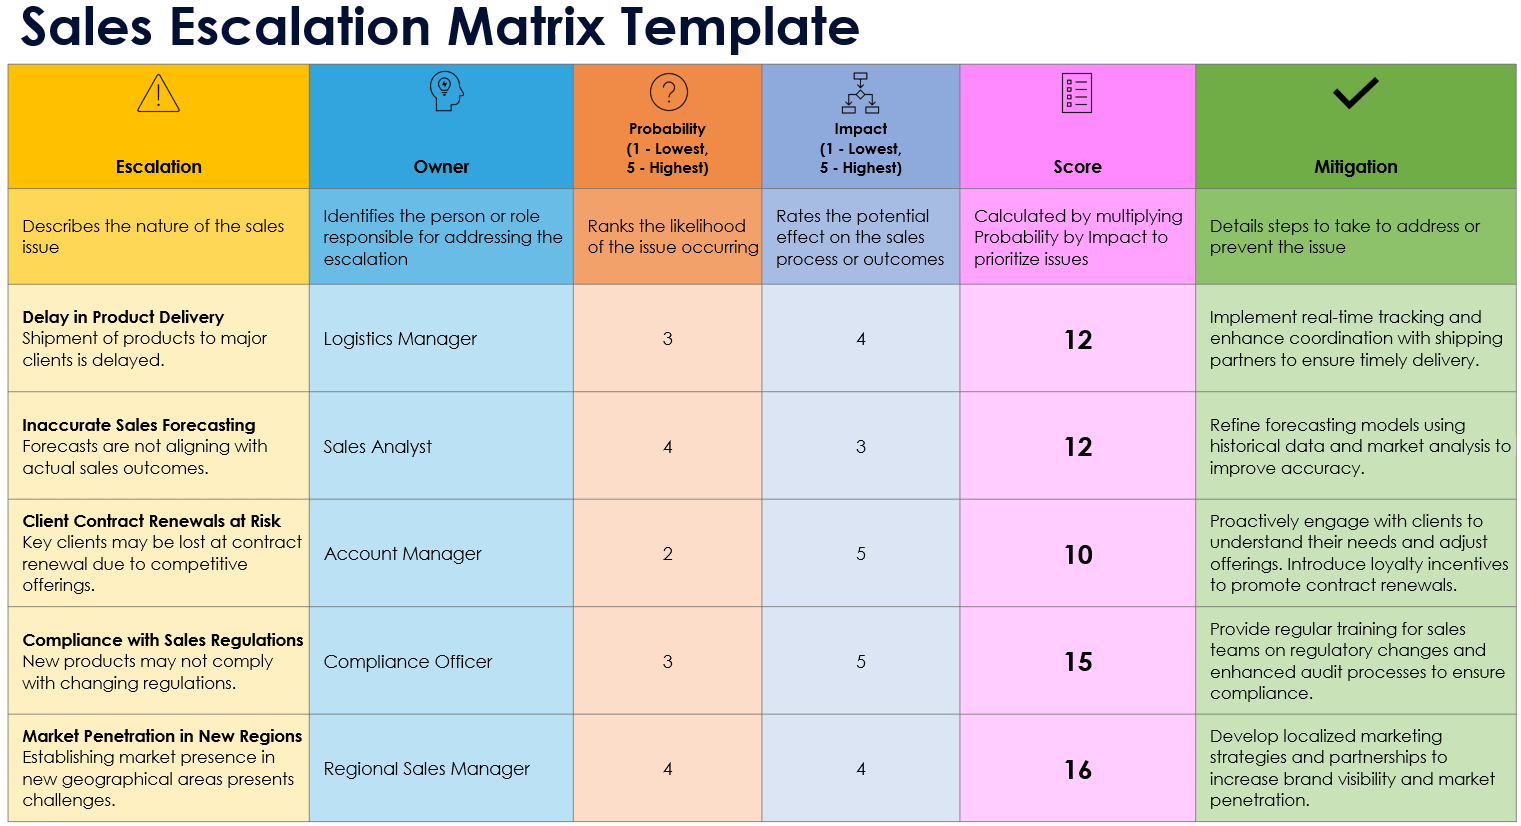 Sales Escalation Matrix Template